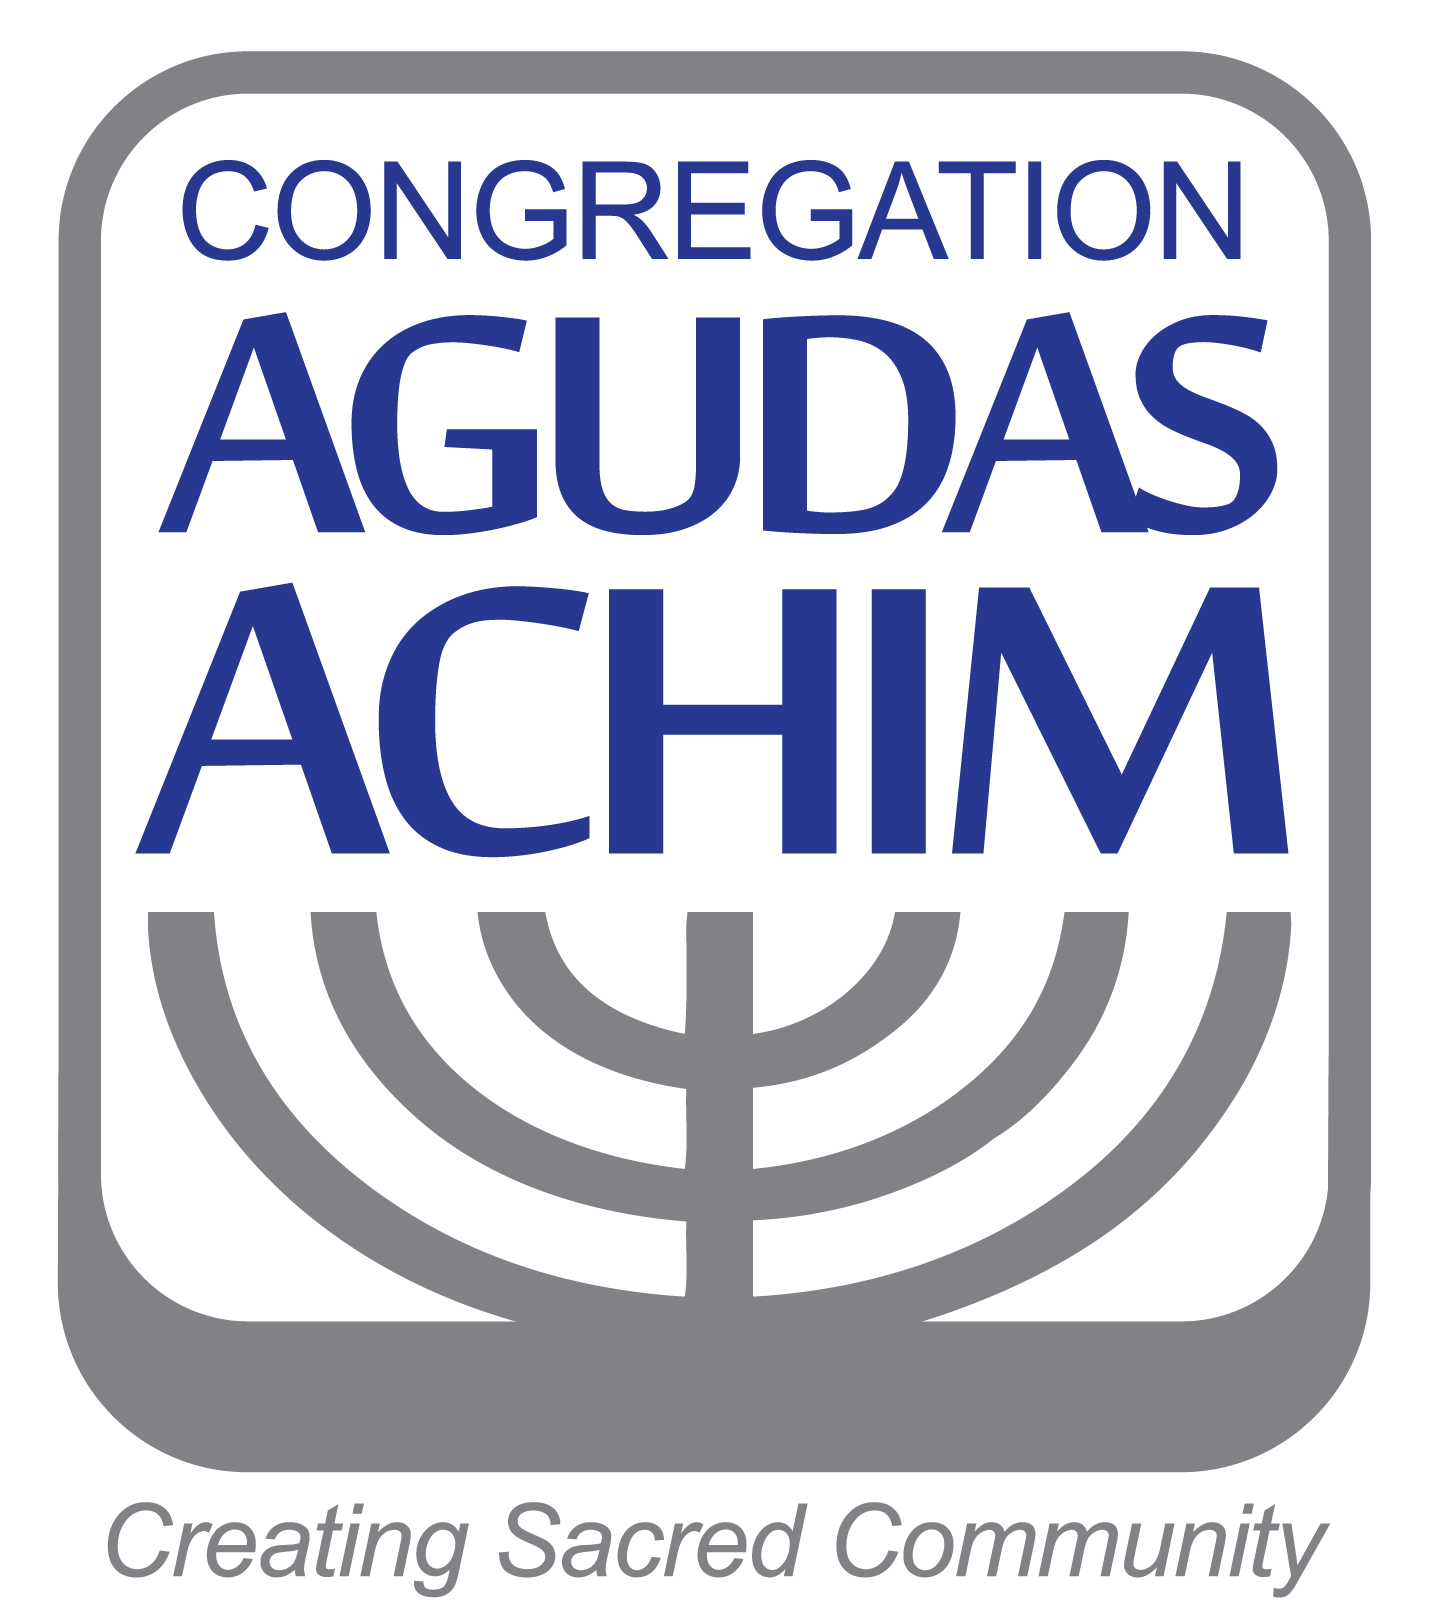 Cong. Agudas Achim - logo